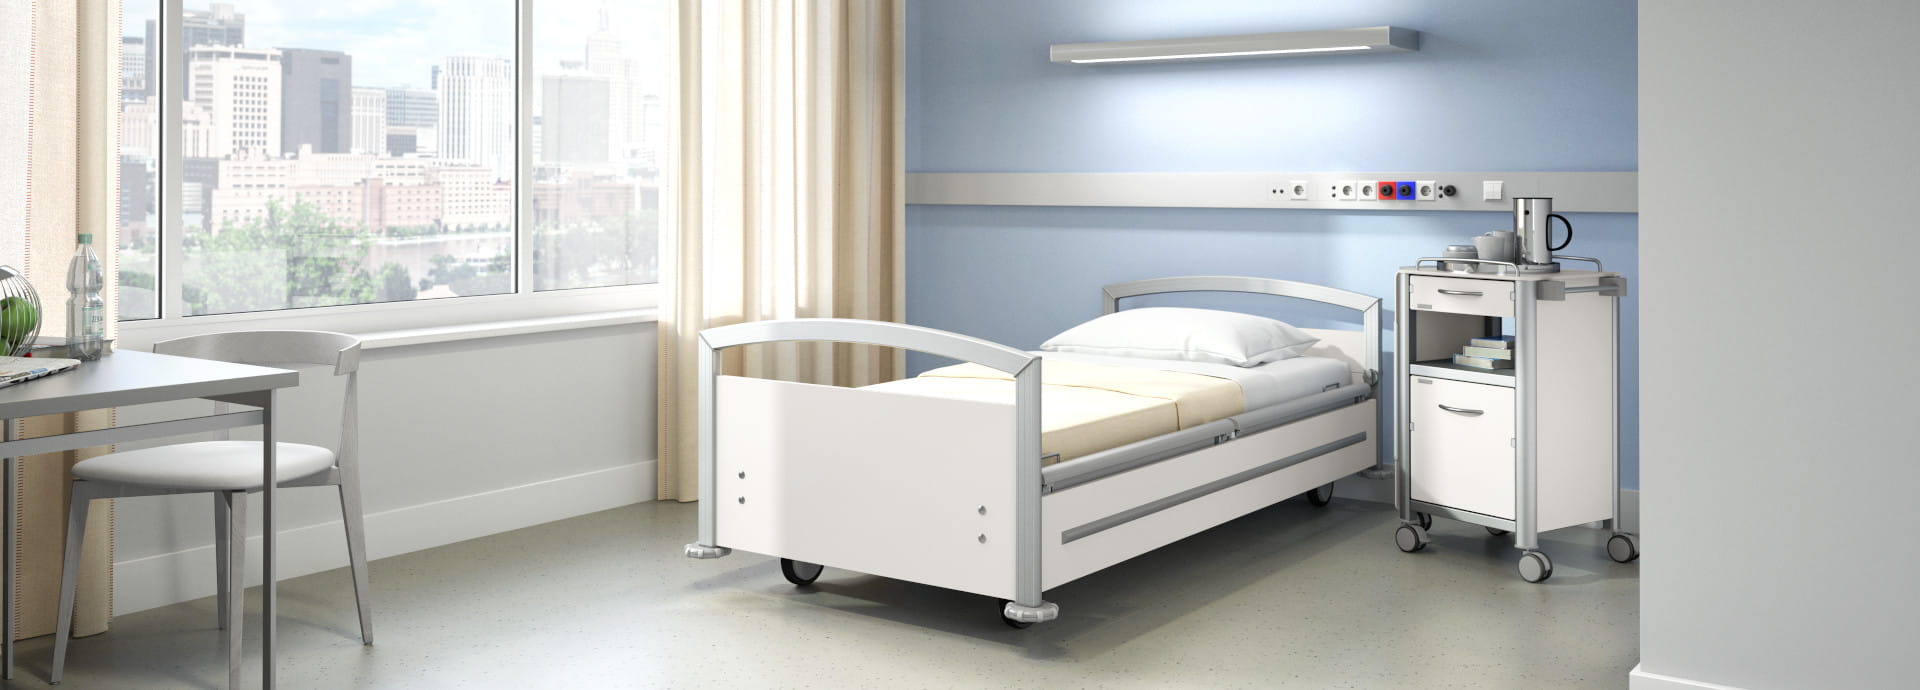 More than hospital bed: low height hospital bed + cozy design = hospitel SafeSense®